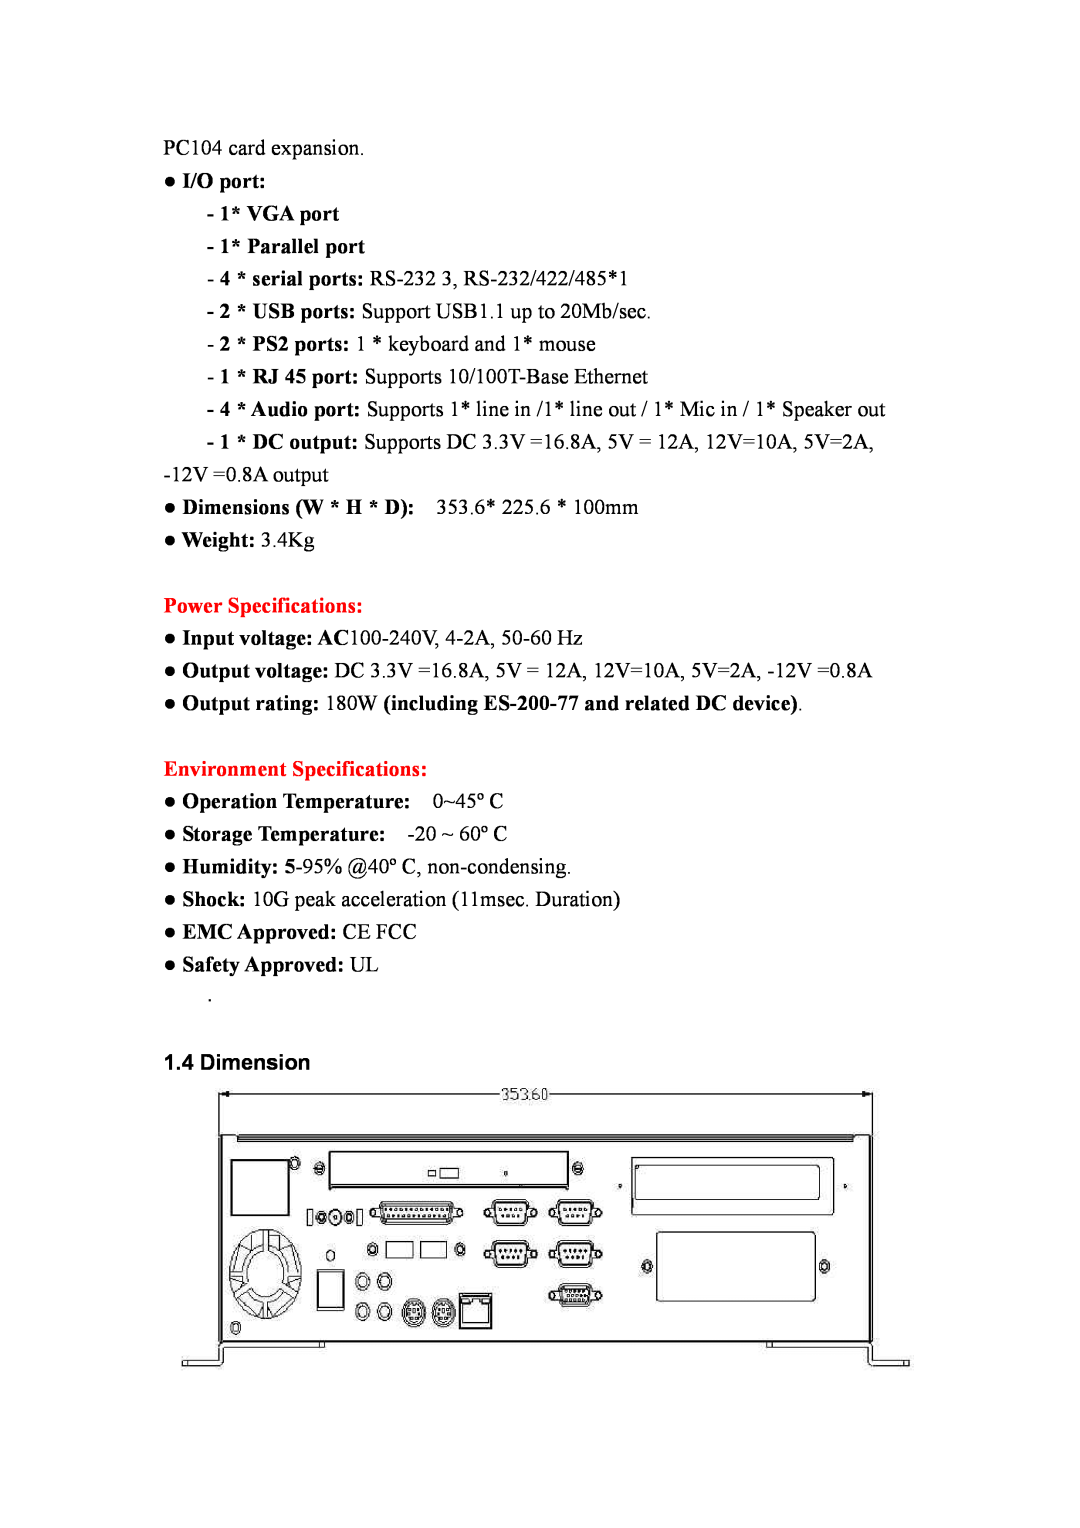 StarTech.com ES-200-77 I/O port 1* VGA port 1* Parallel port, Dimensions W * H * D 353.6* 225.6 * 100mm Weight 3.4Kg 